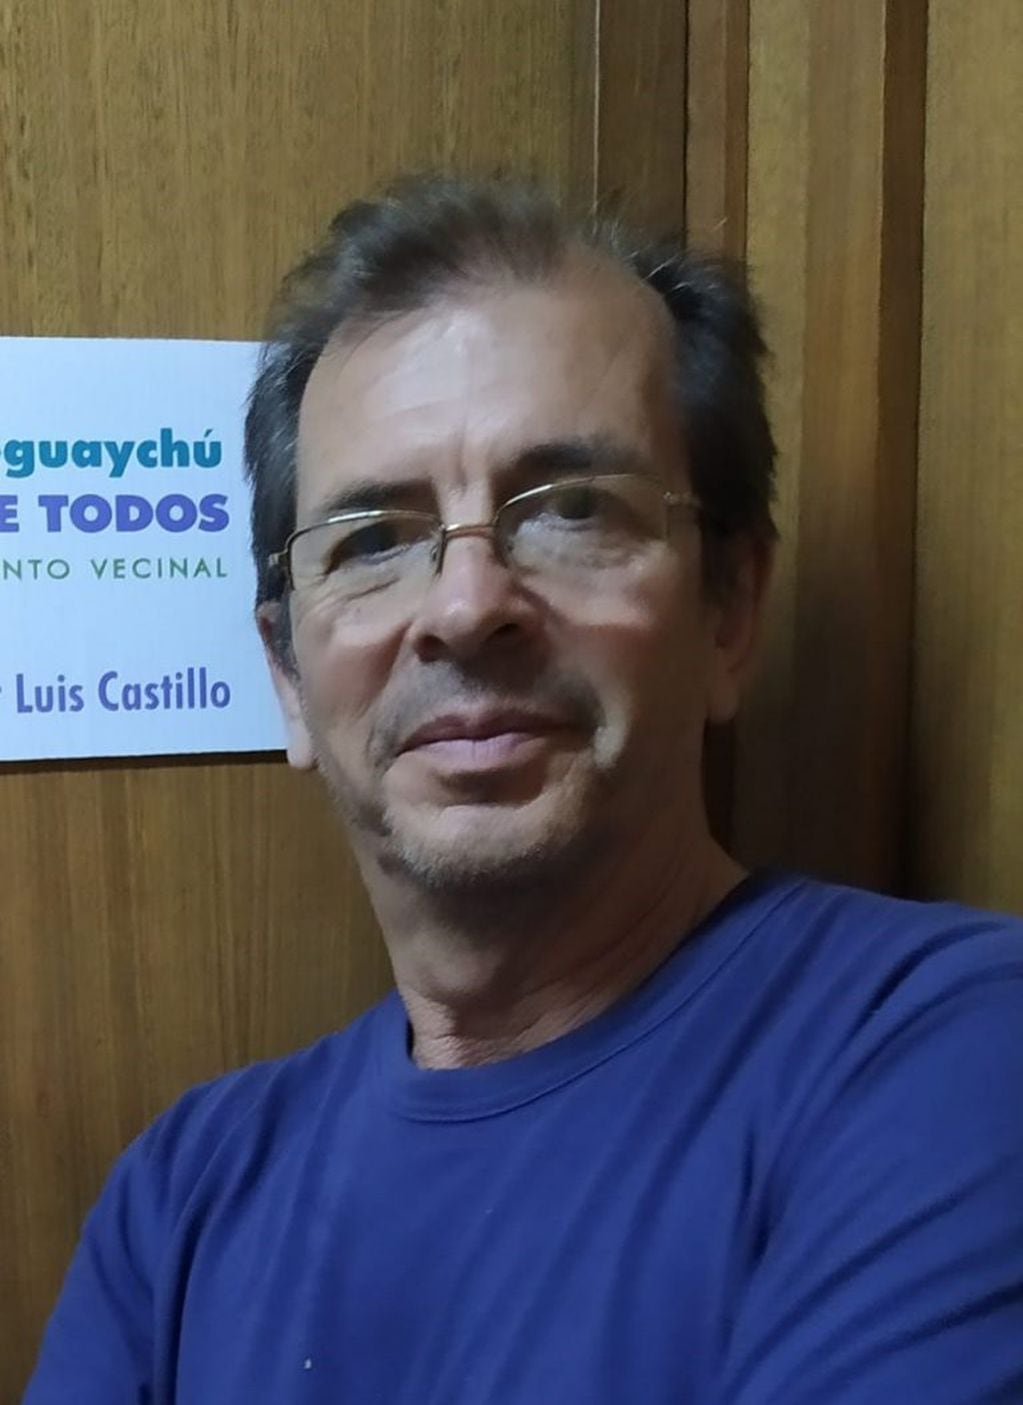 Dr. Luis Castillo - Médico Hematólogo
Crédito: Dr. Castillo